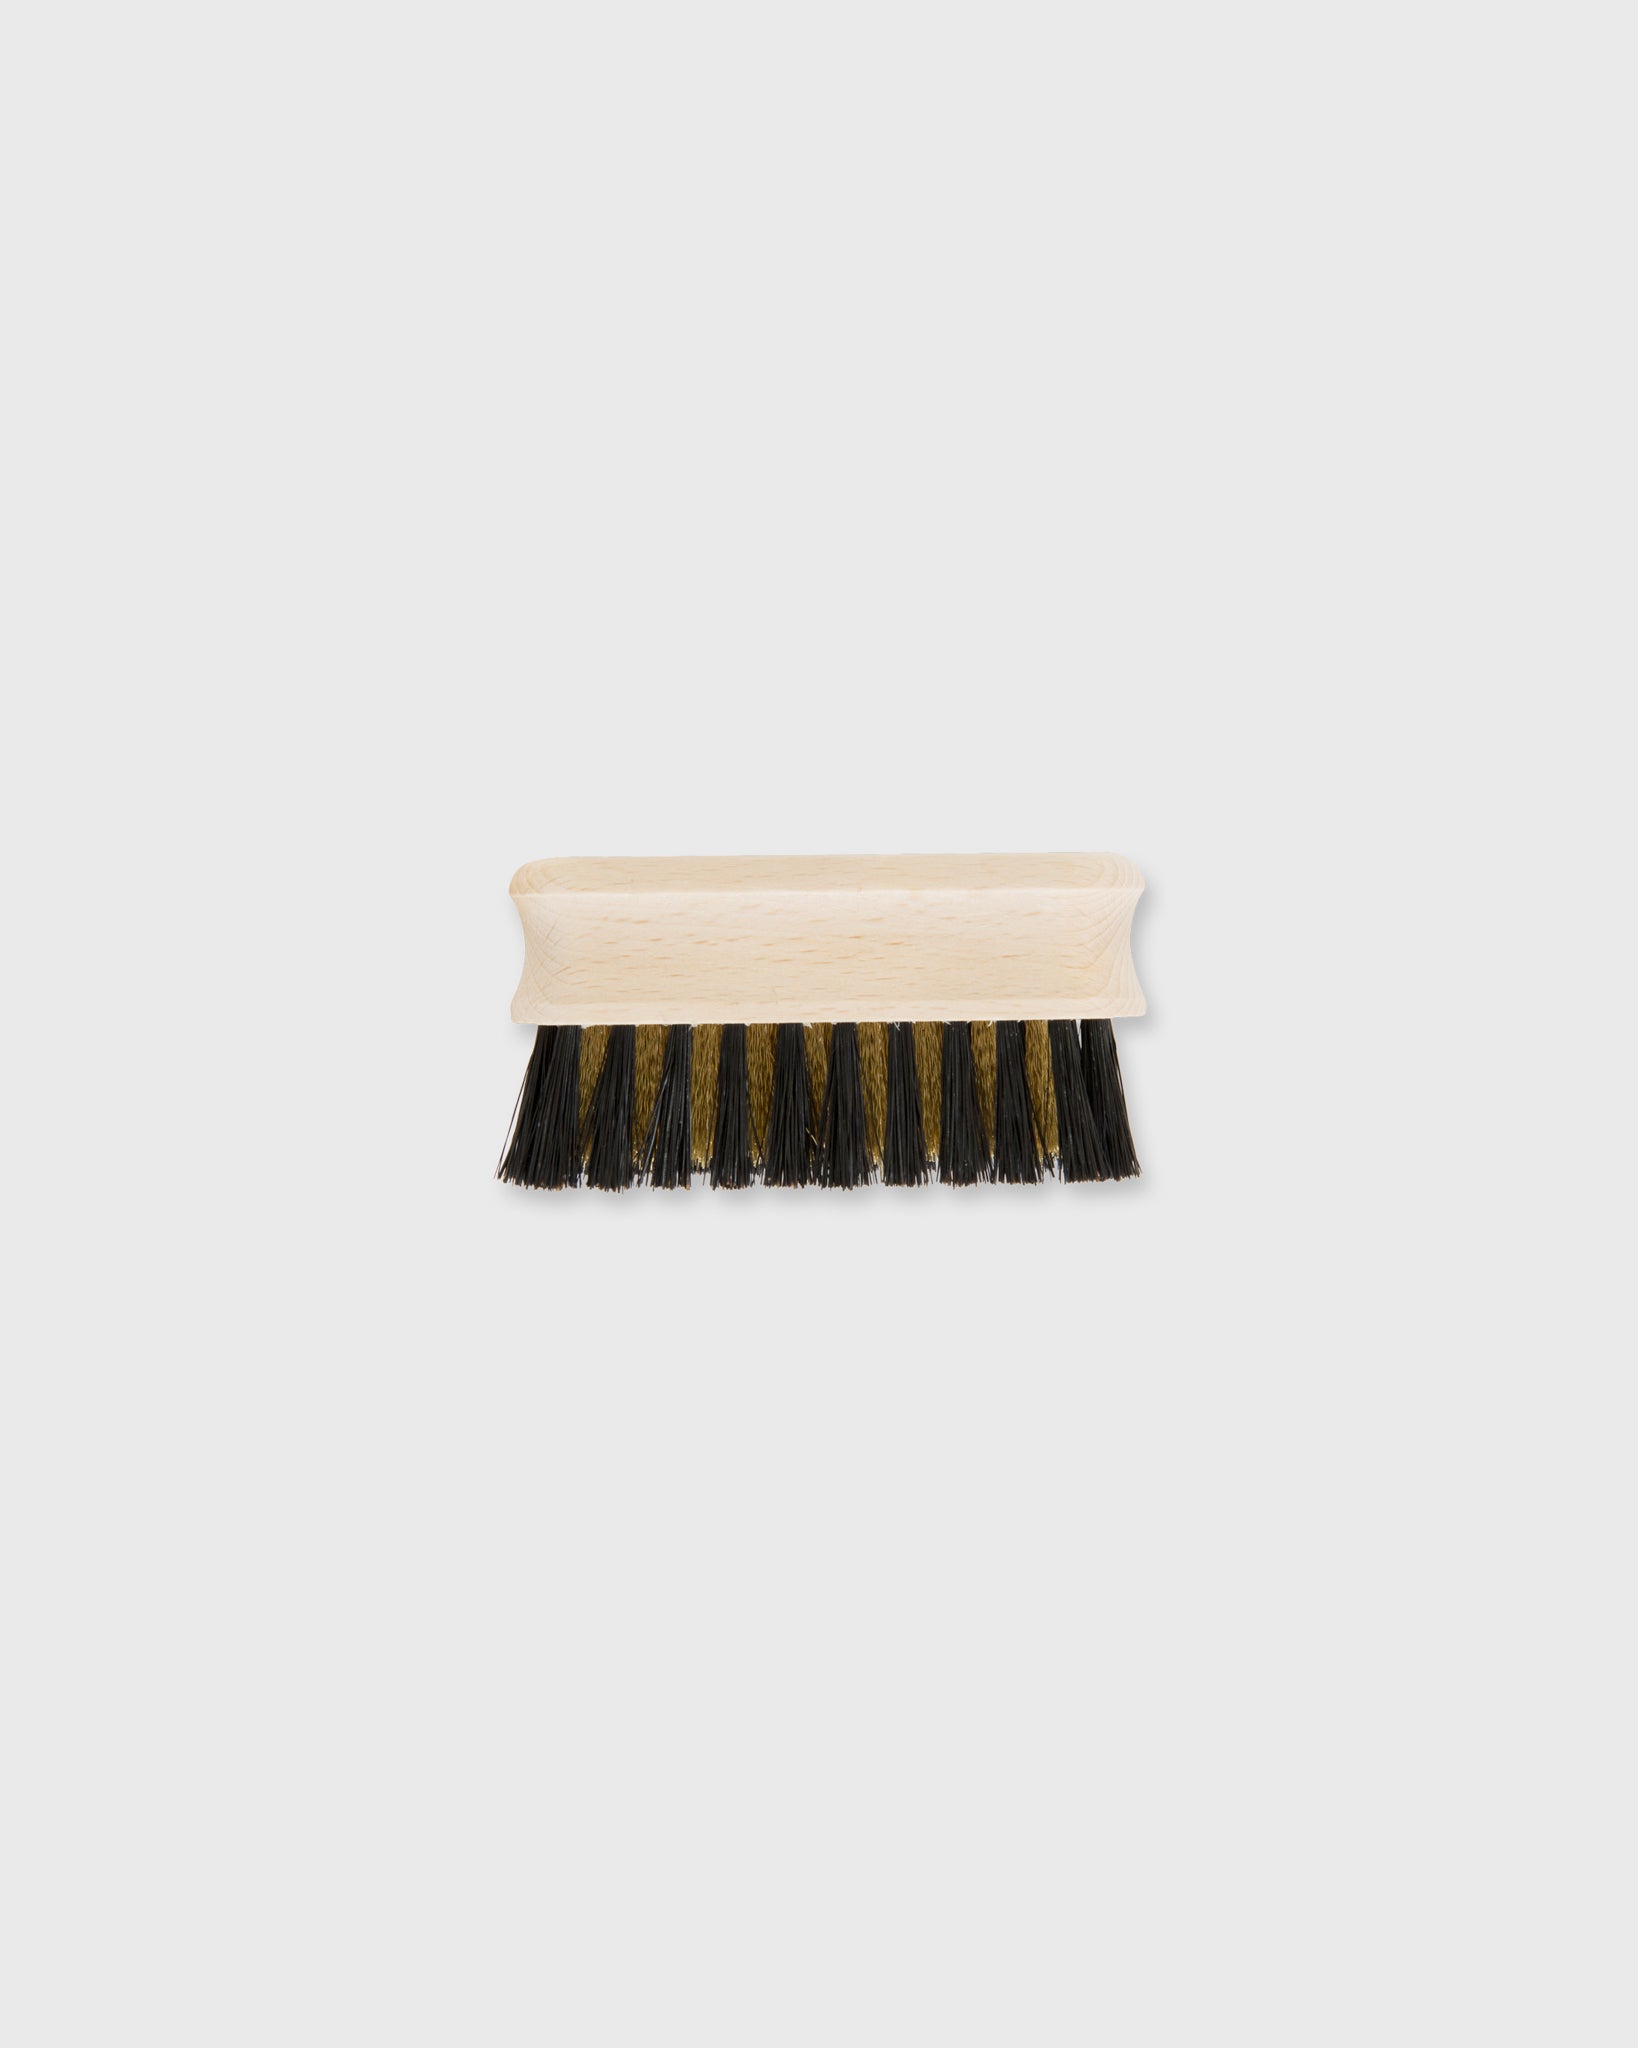 Small Suede Brush Untreated Beechwood/Brass Bristles